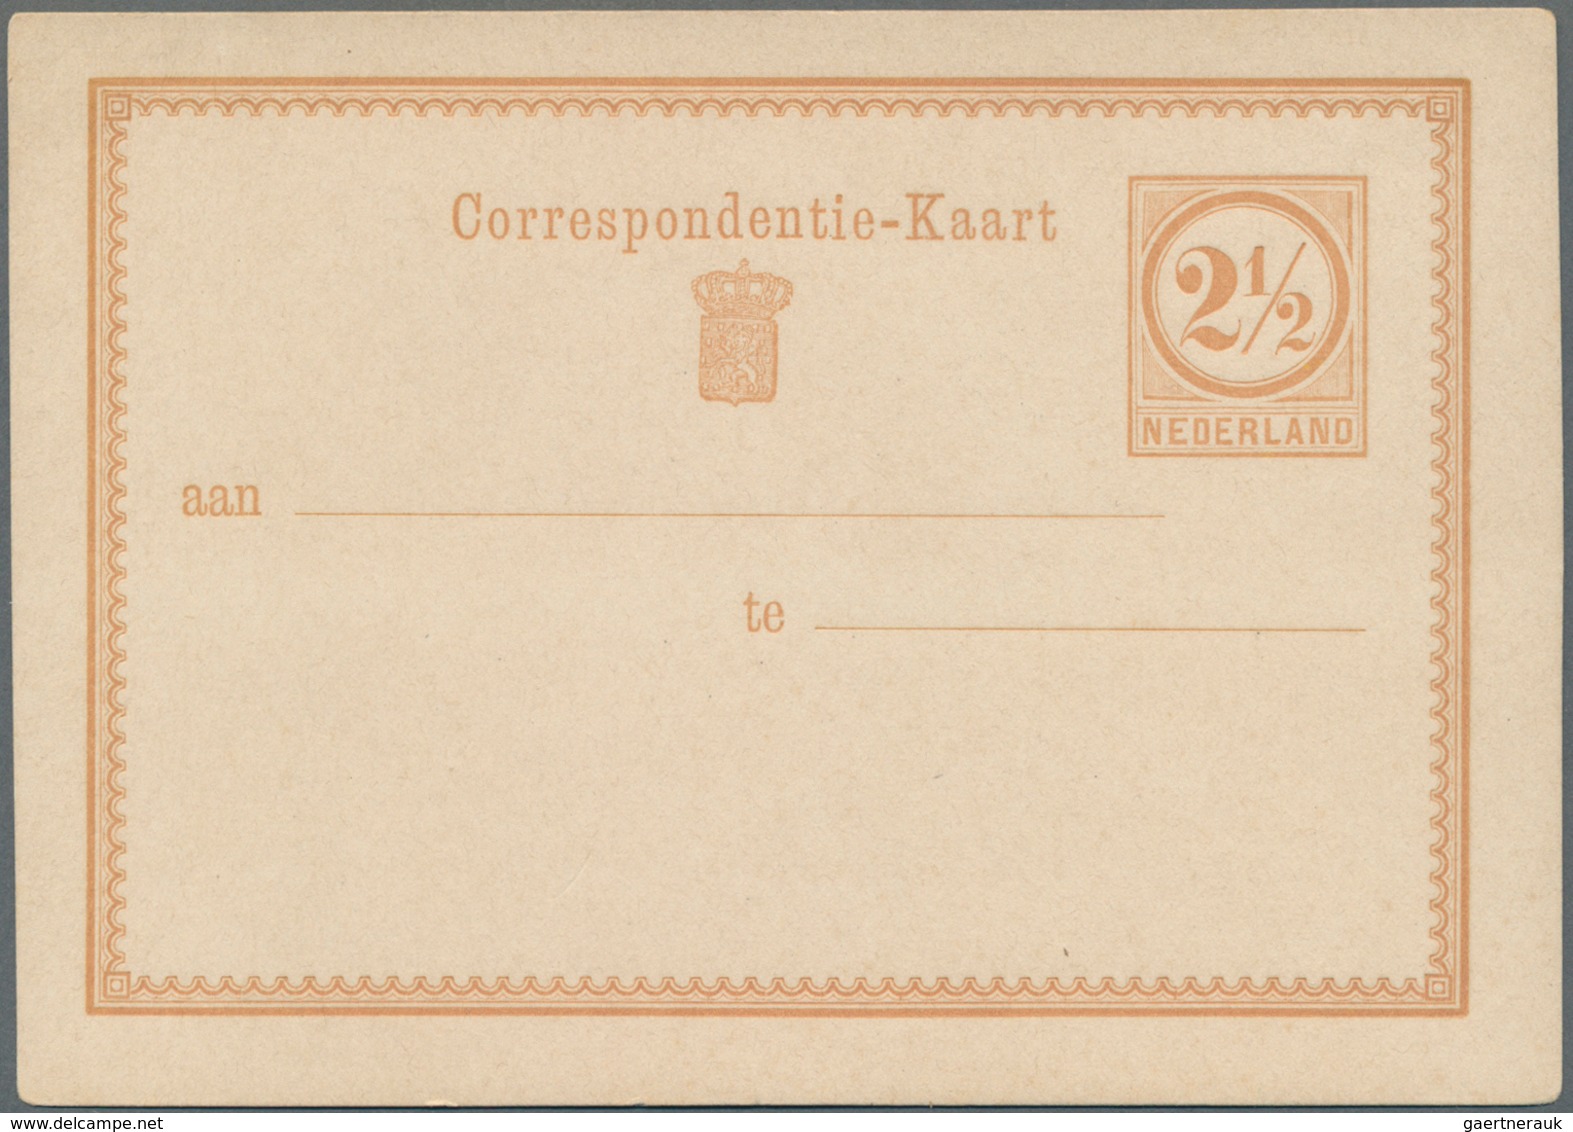 Niederlande - Ganzsachen: 1870, five proofs for a 2 1/2 stationery card. Seldomly seen.